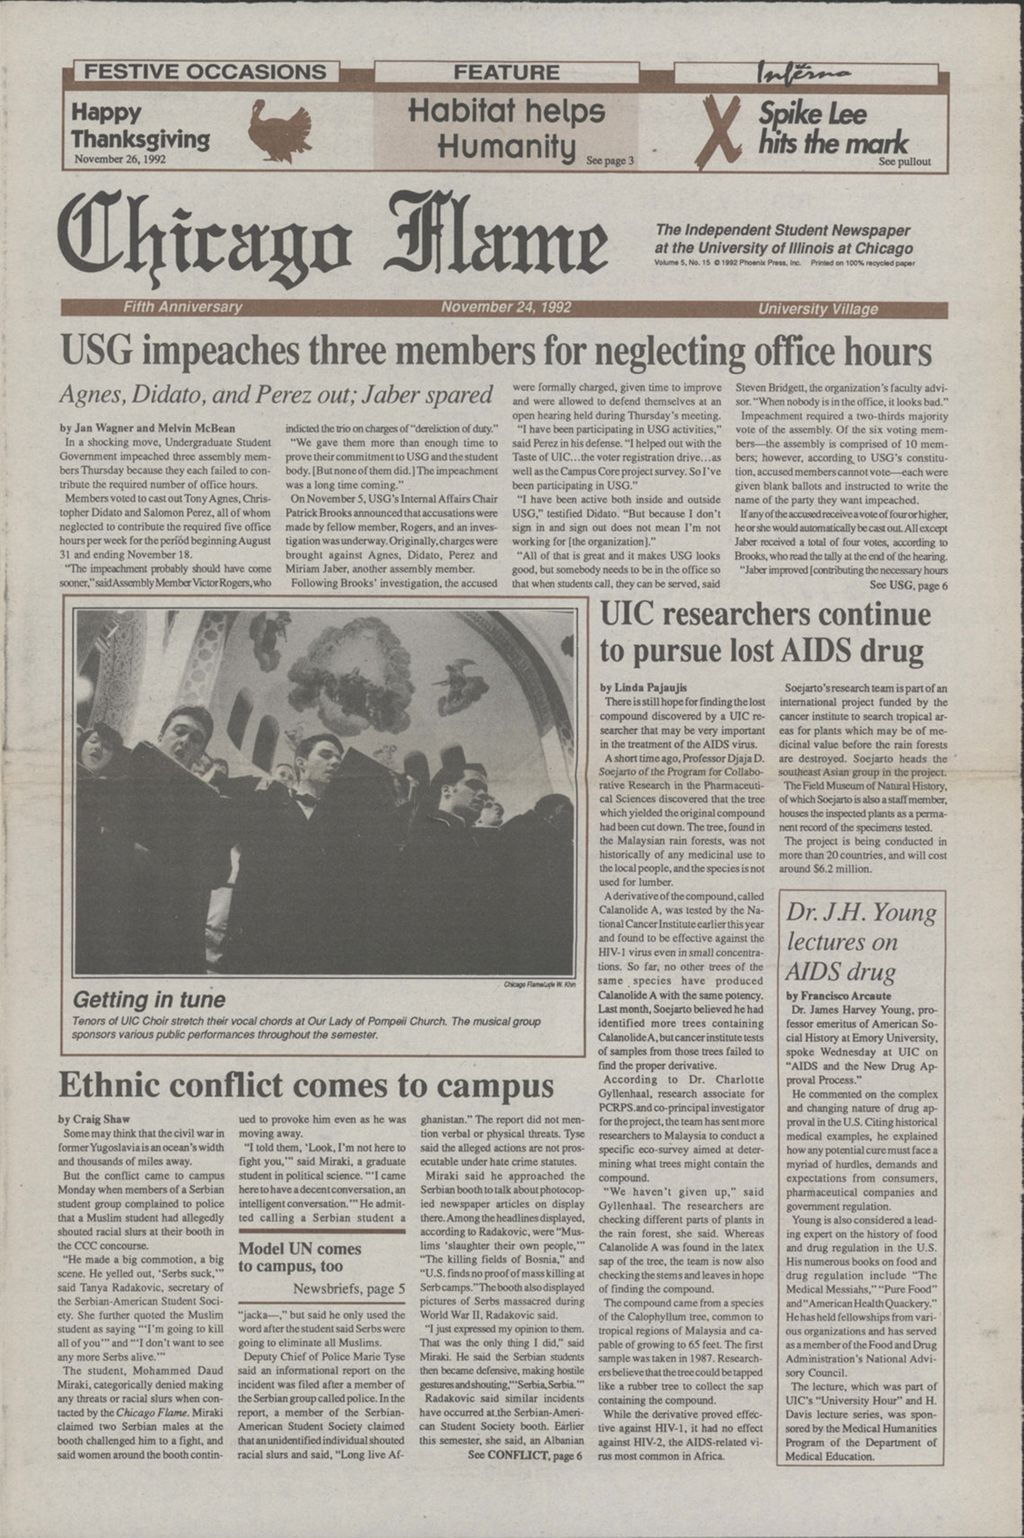 Chicago Flame (November 24, 1992)